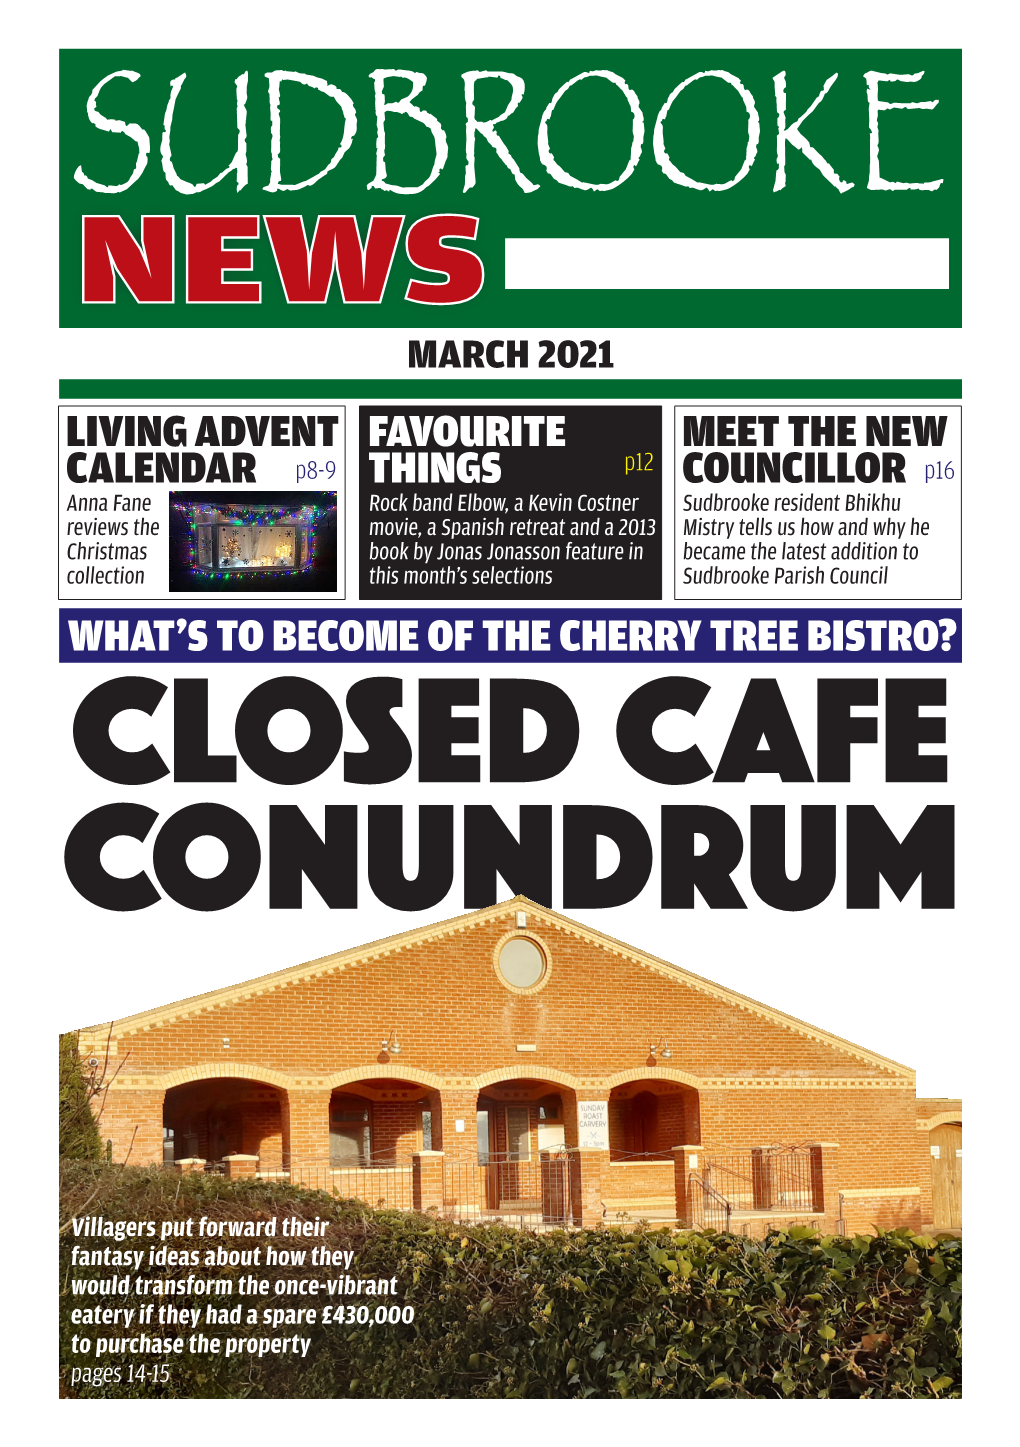 Closed Cafe Conundrum